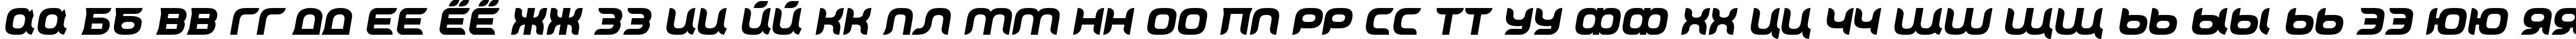 Пример написания русского алфавита шрифтом Cyrivendell by Ivan Apostolski